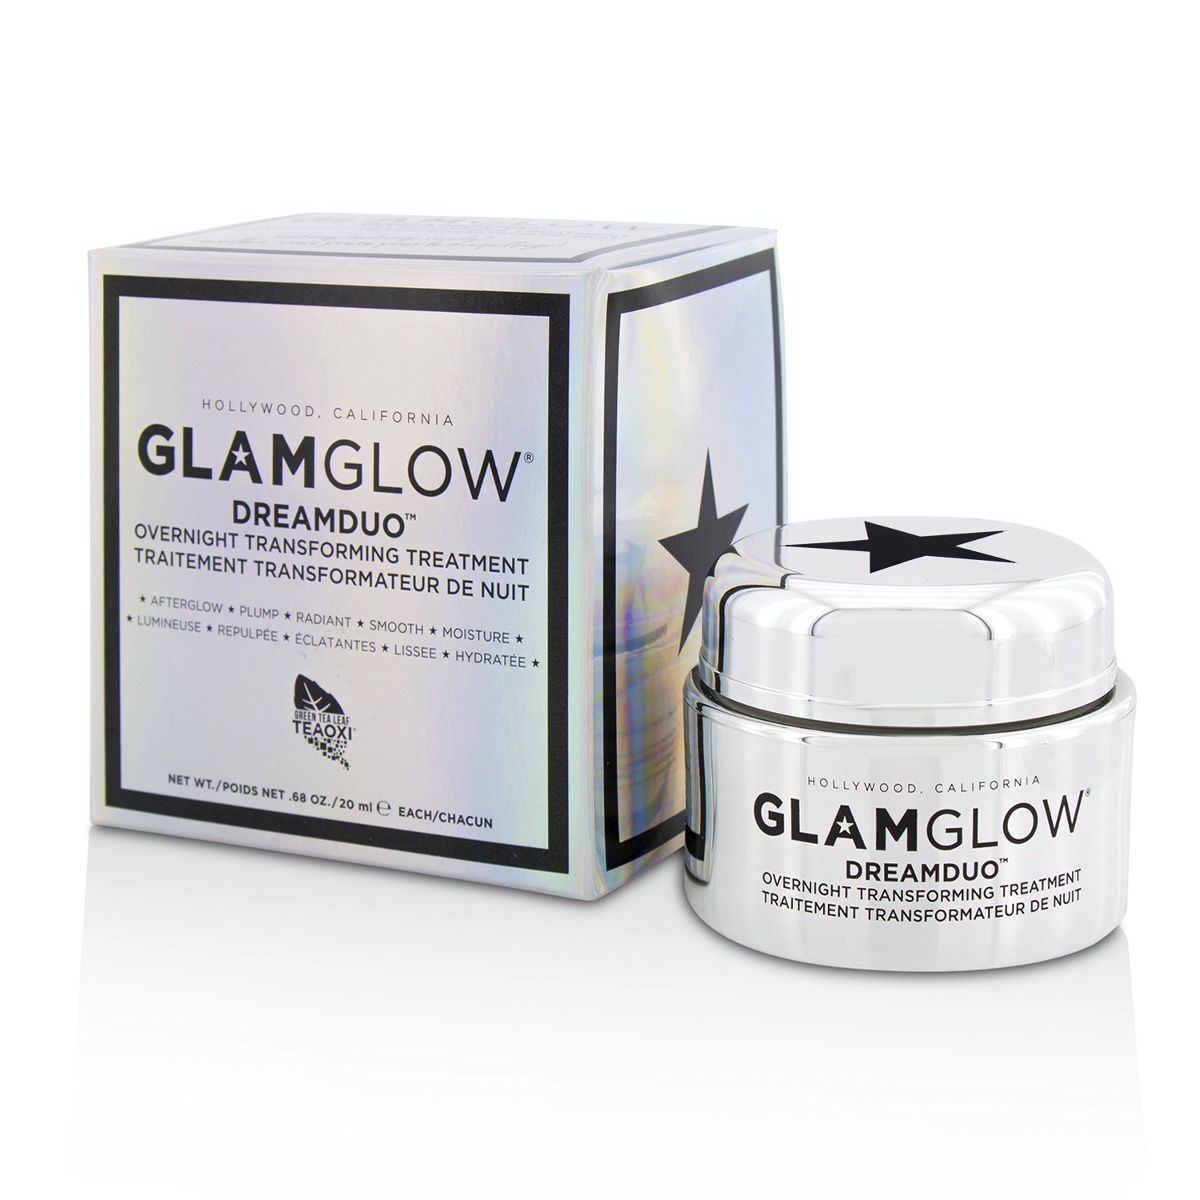 DreamDuo Overnight Transforming Treatment Glamglow Image